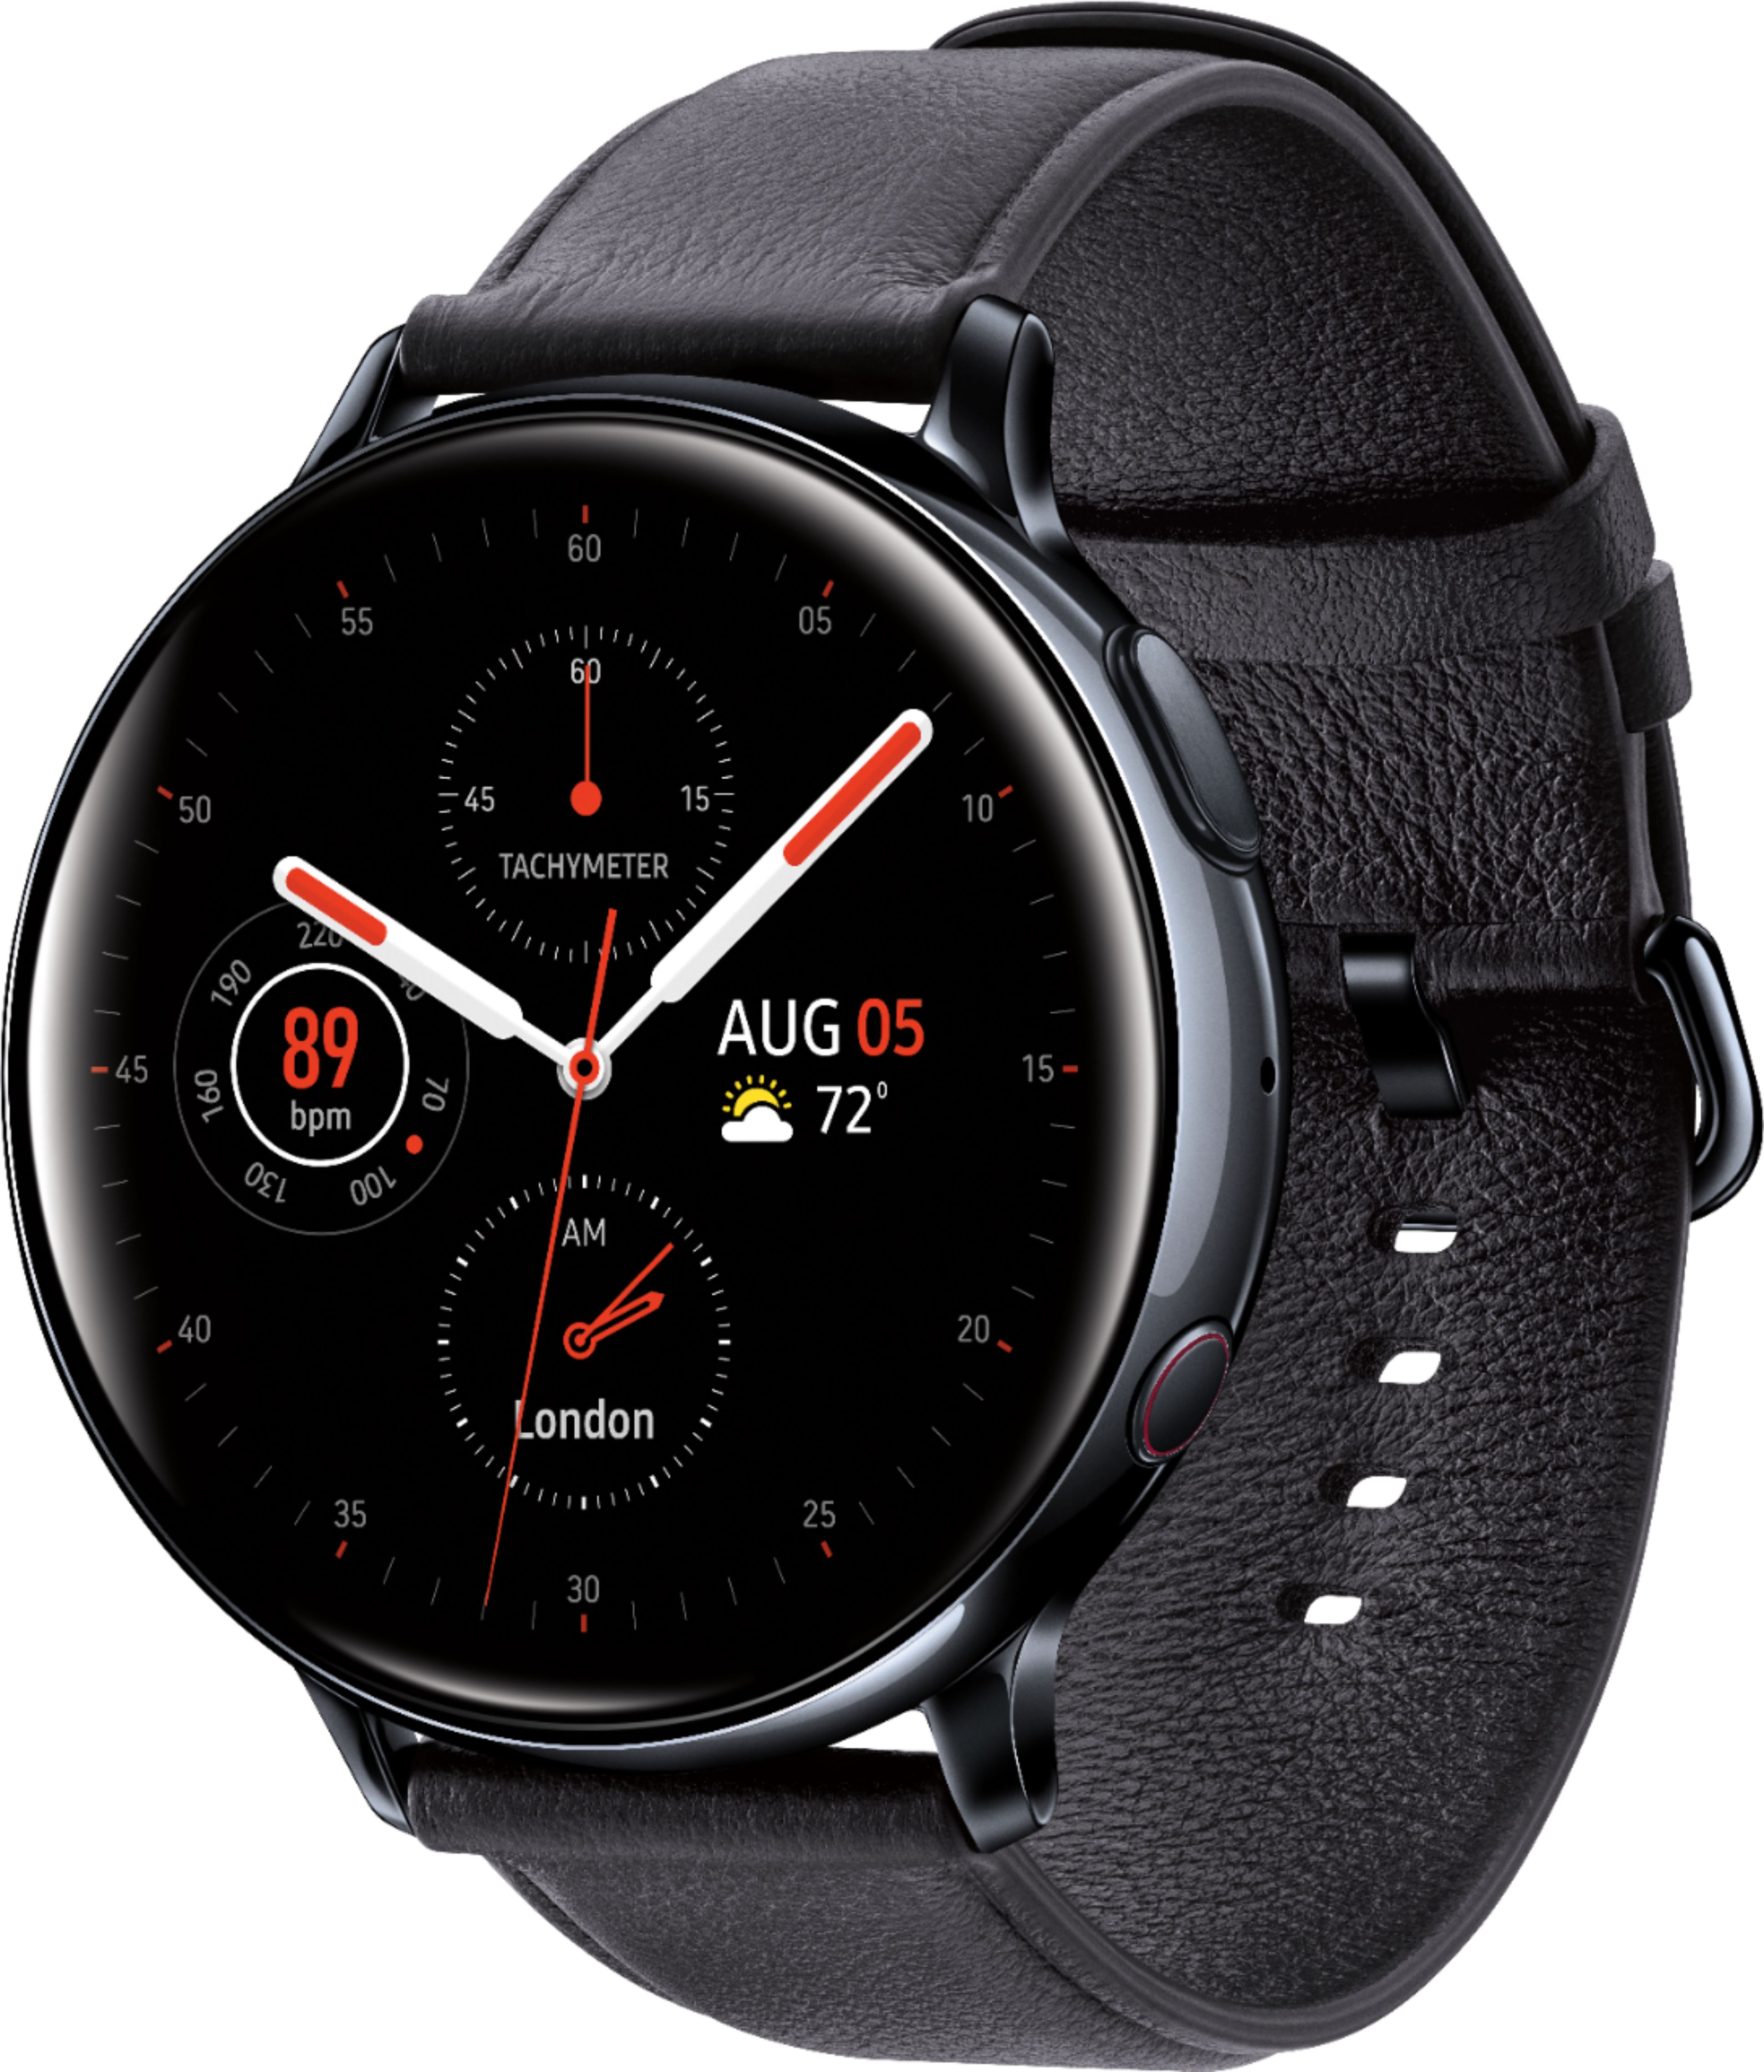 Angle View: SAMSUNG Galaxy Watch 3 41mm Mystic Bronze BT - SM-R850NZDAXAR